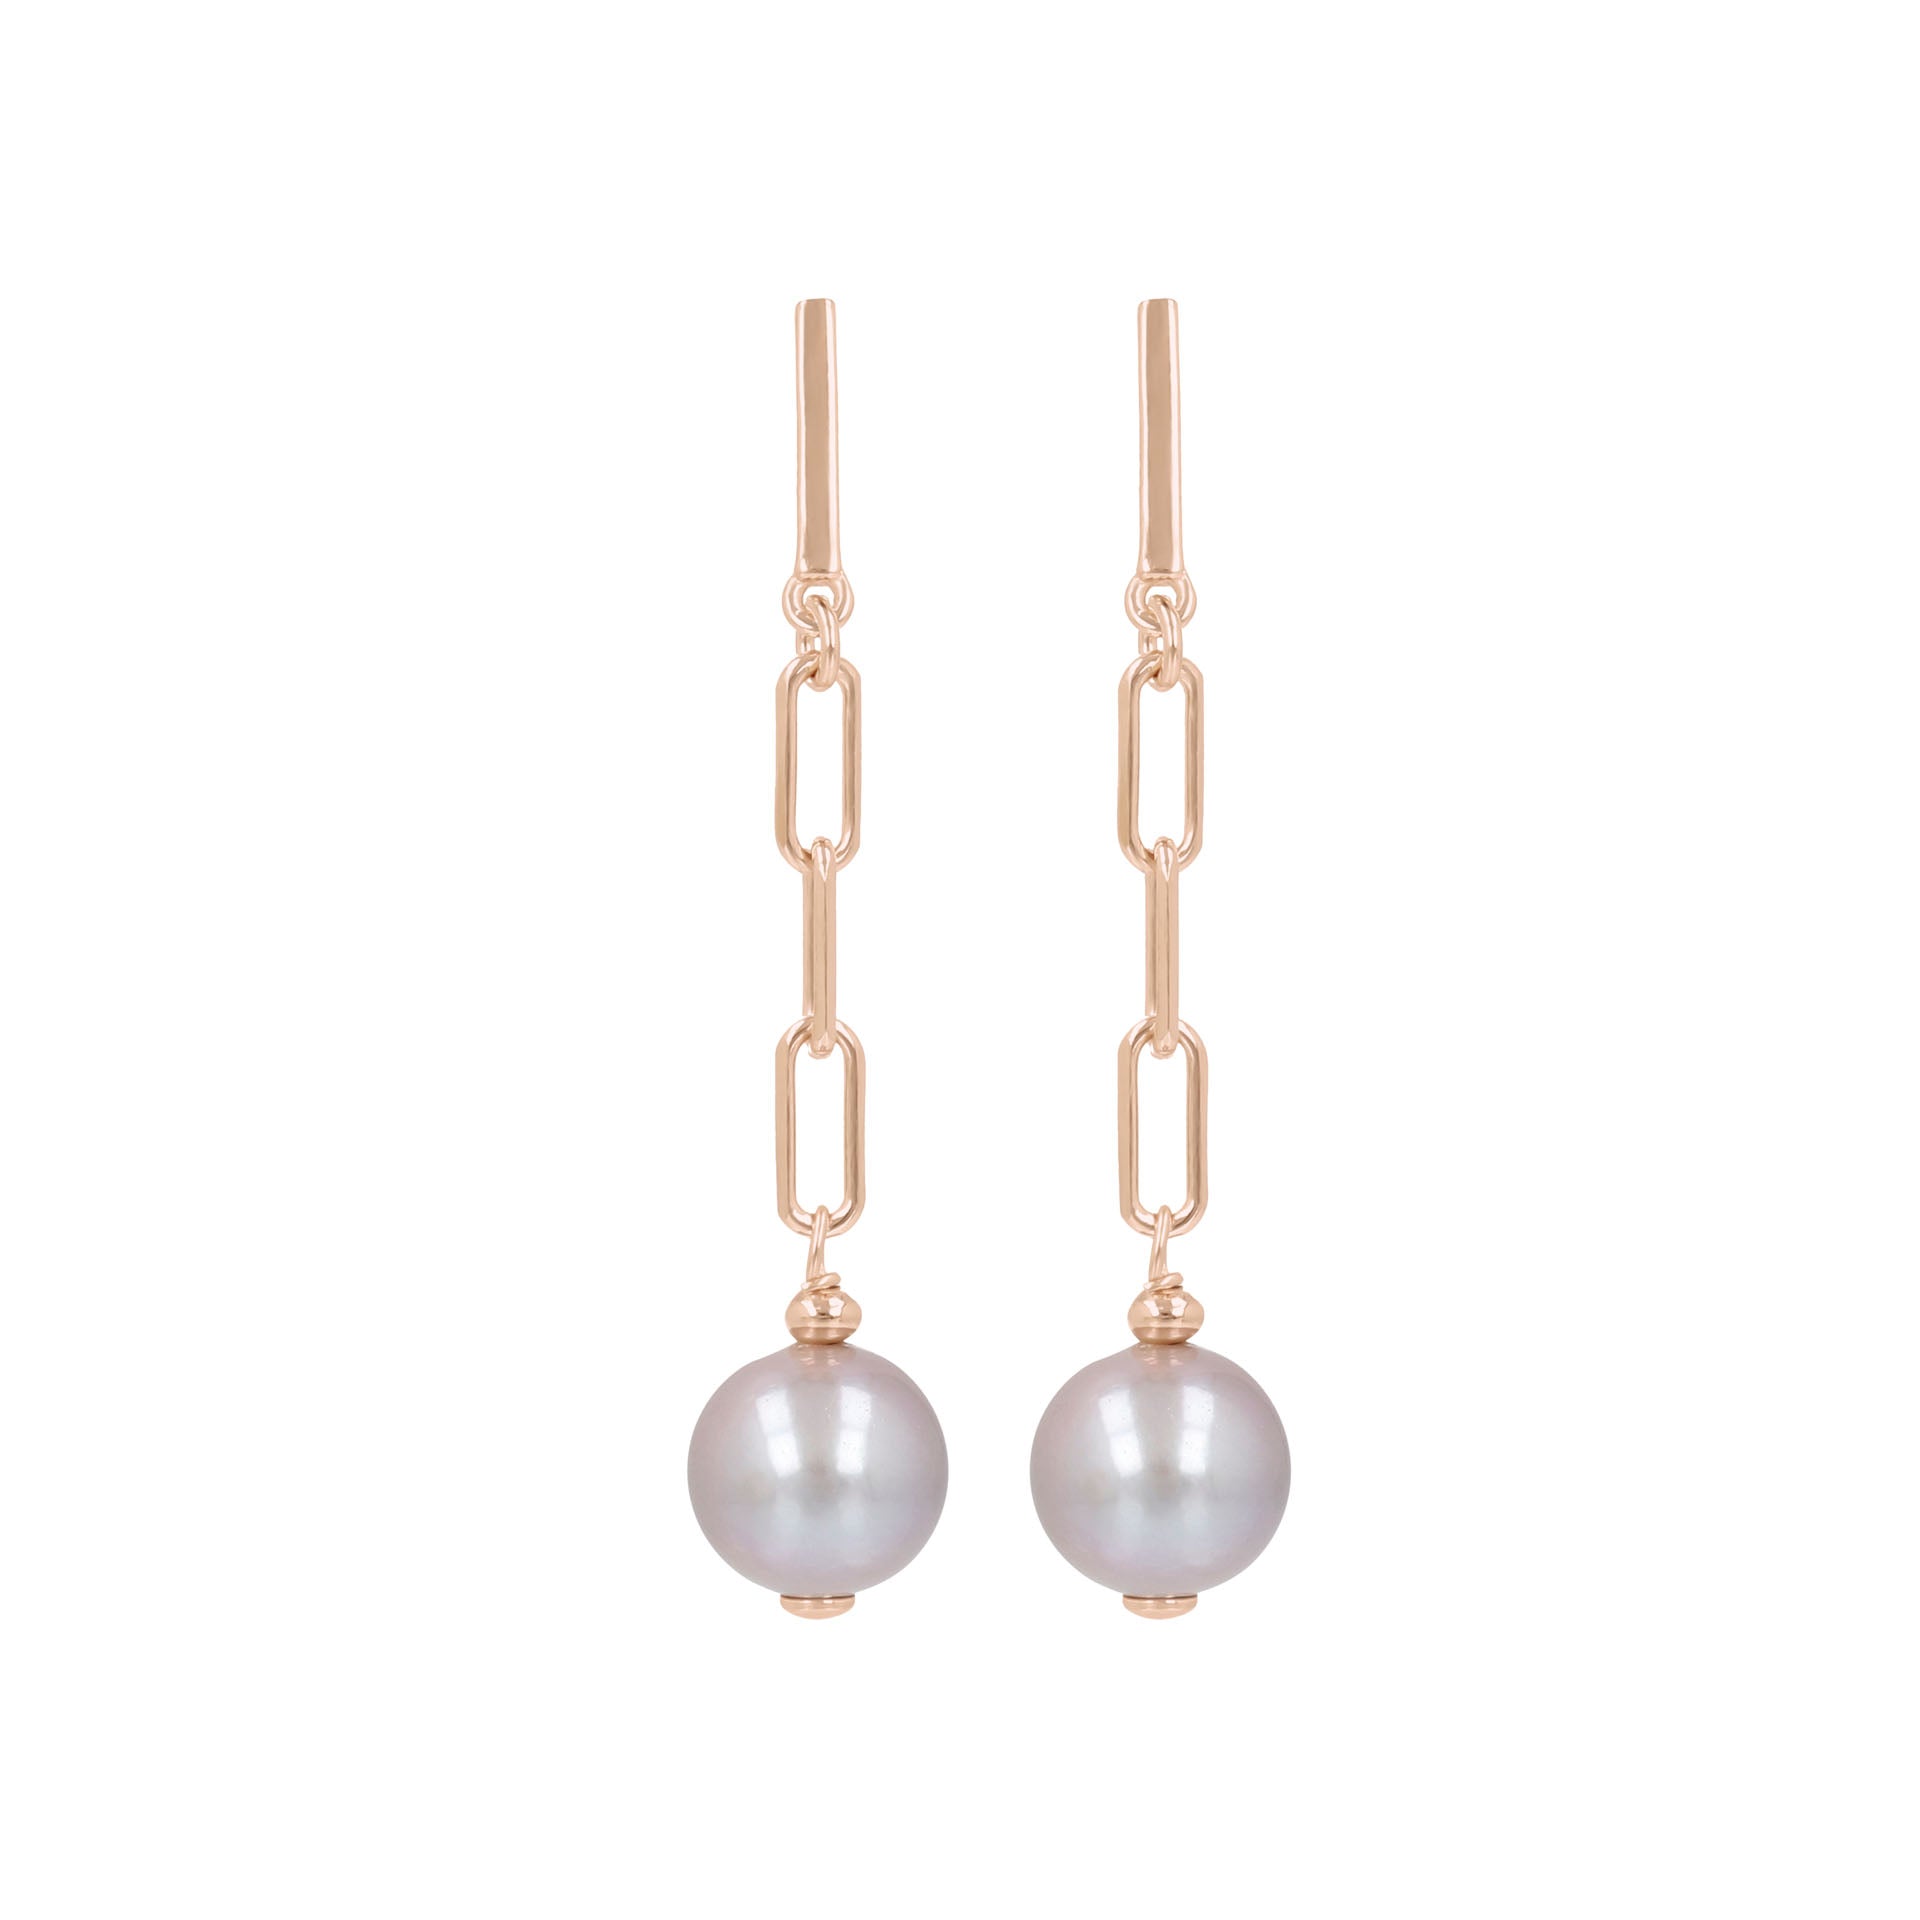 Louis Dell’Olio “Perla Moderna” Ming Cultured Pearl Dangle Earrings